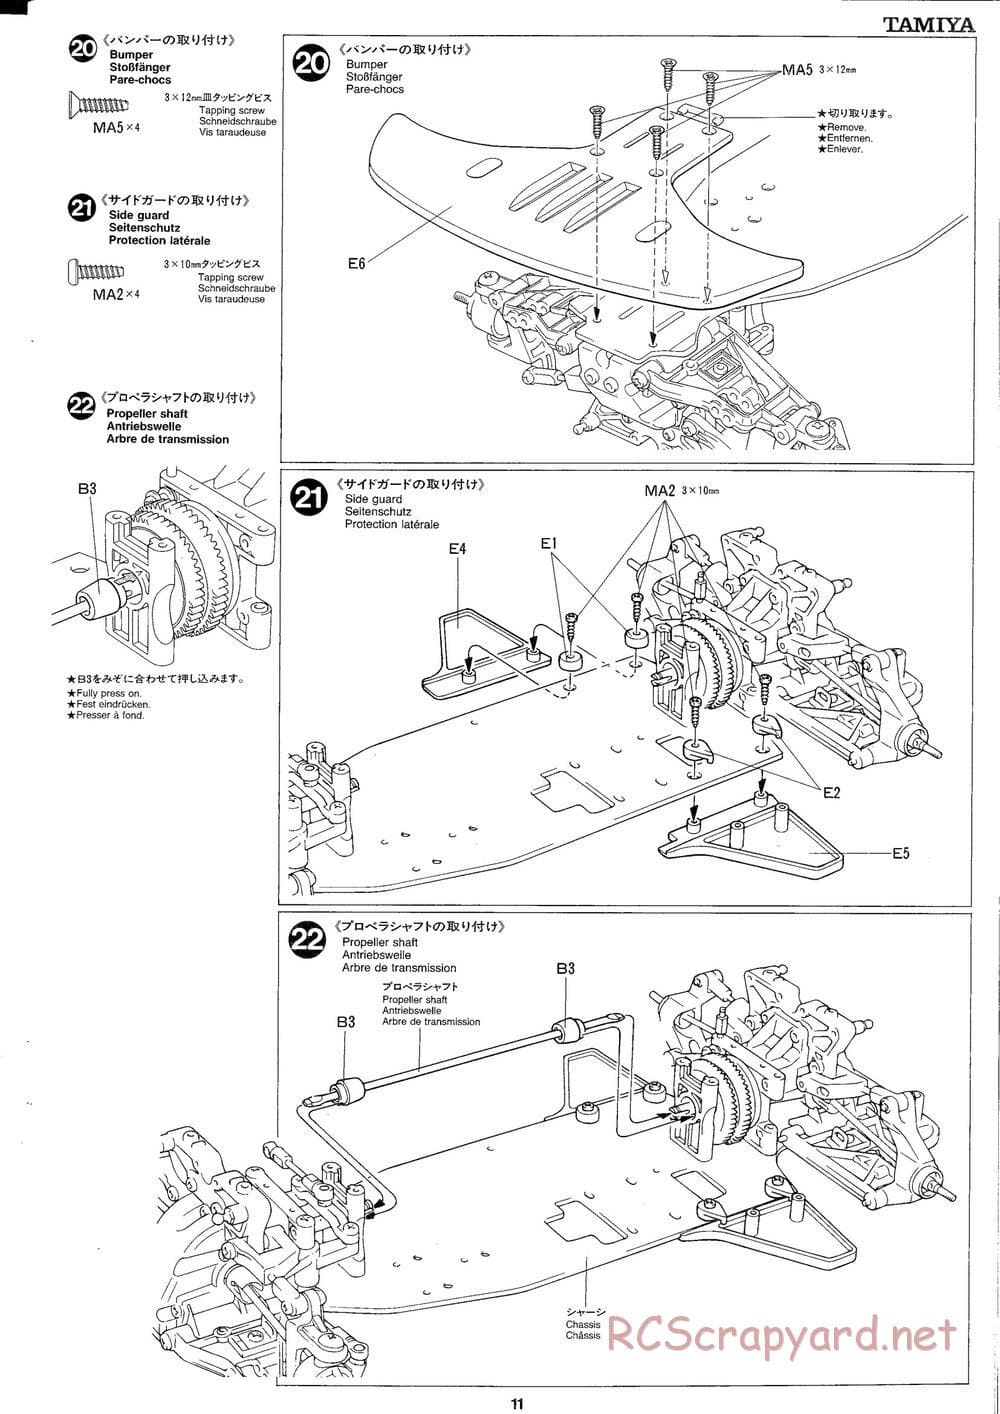 Tamiya - TGX Mk.1 TRF Special Chassis - Manual - Page 11